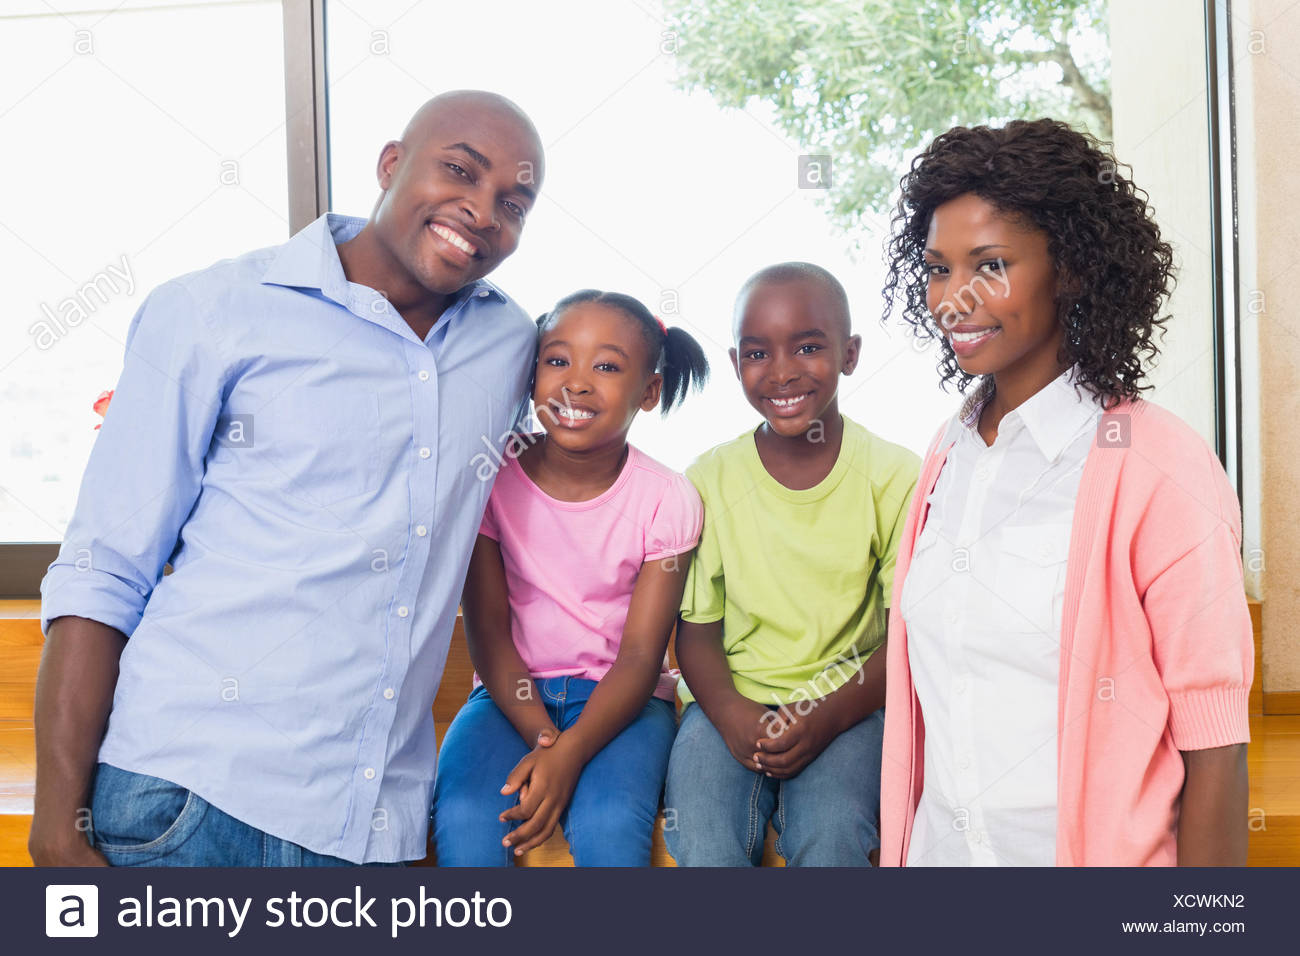 Stock Photo Of Black Family